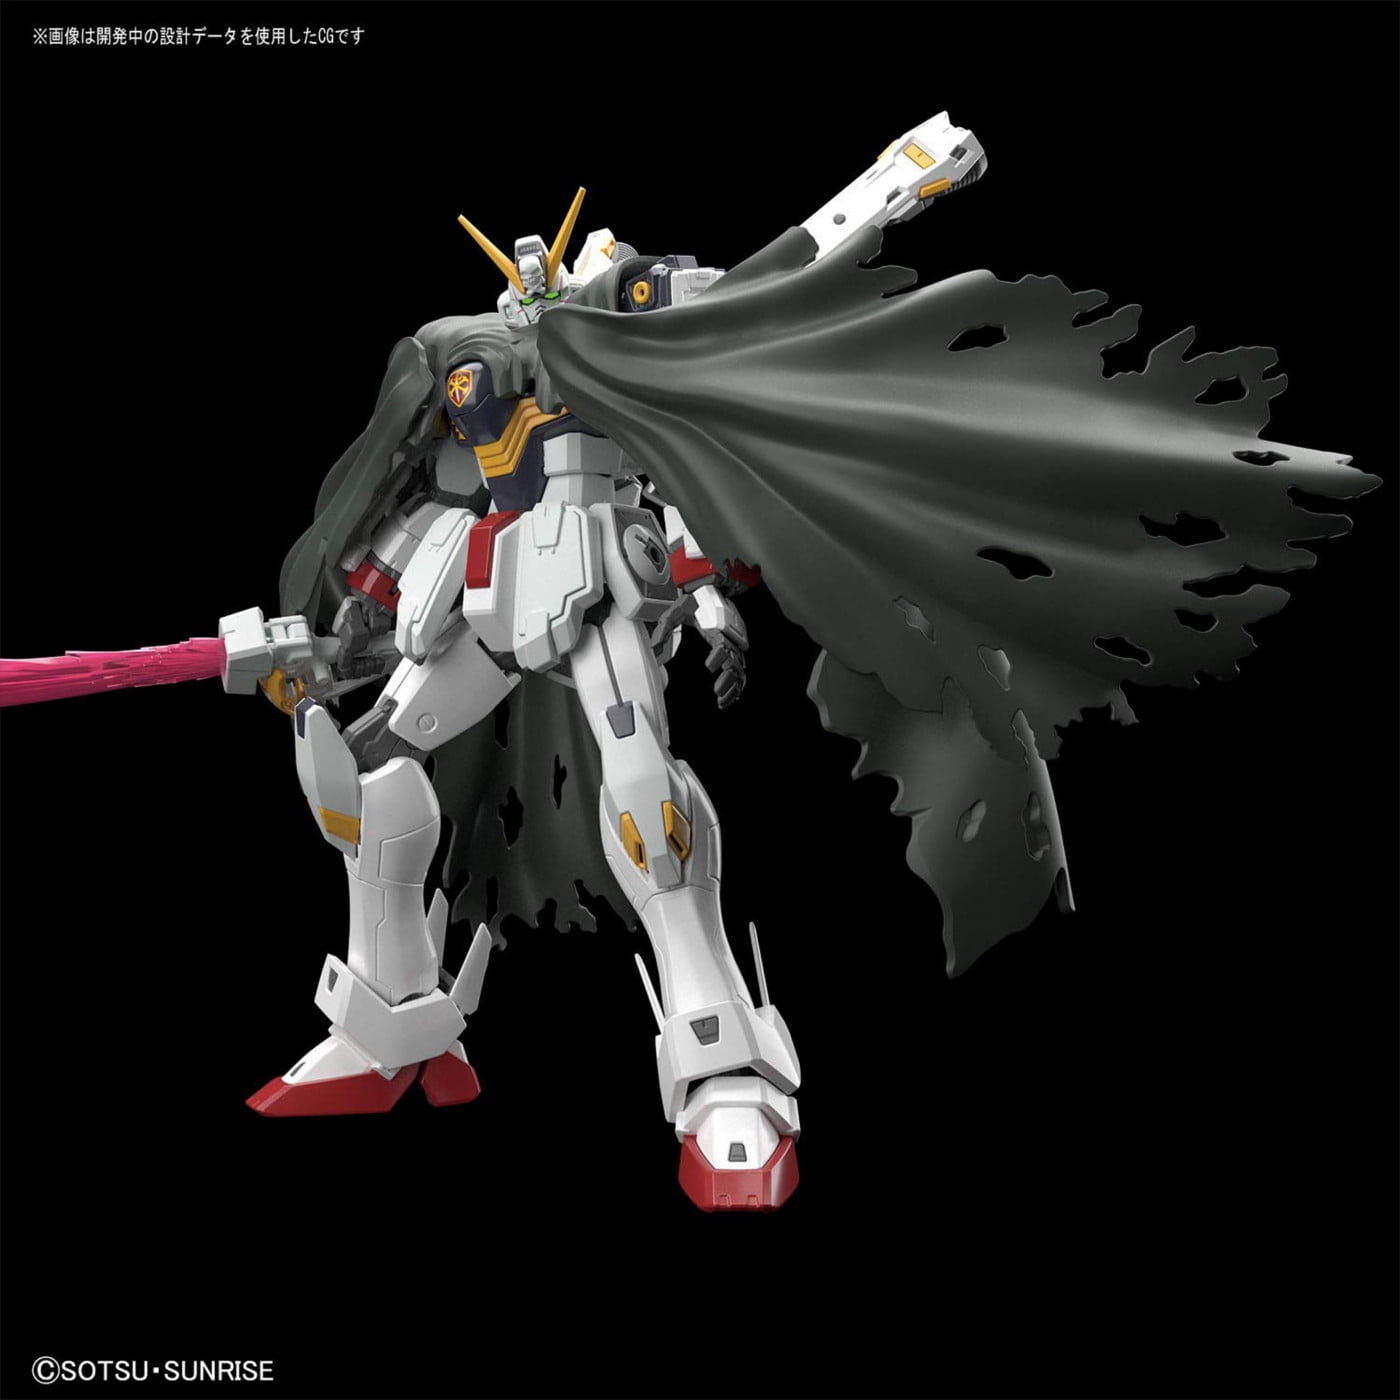 Bandai RG Series 31 Crossbone Gundam X1 1/144 Scale Plastic Model Kit for sale online 